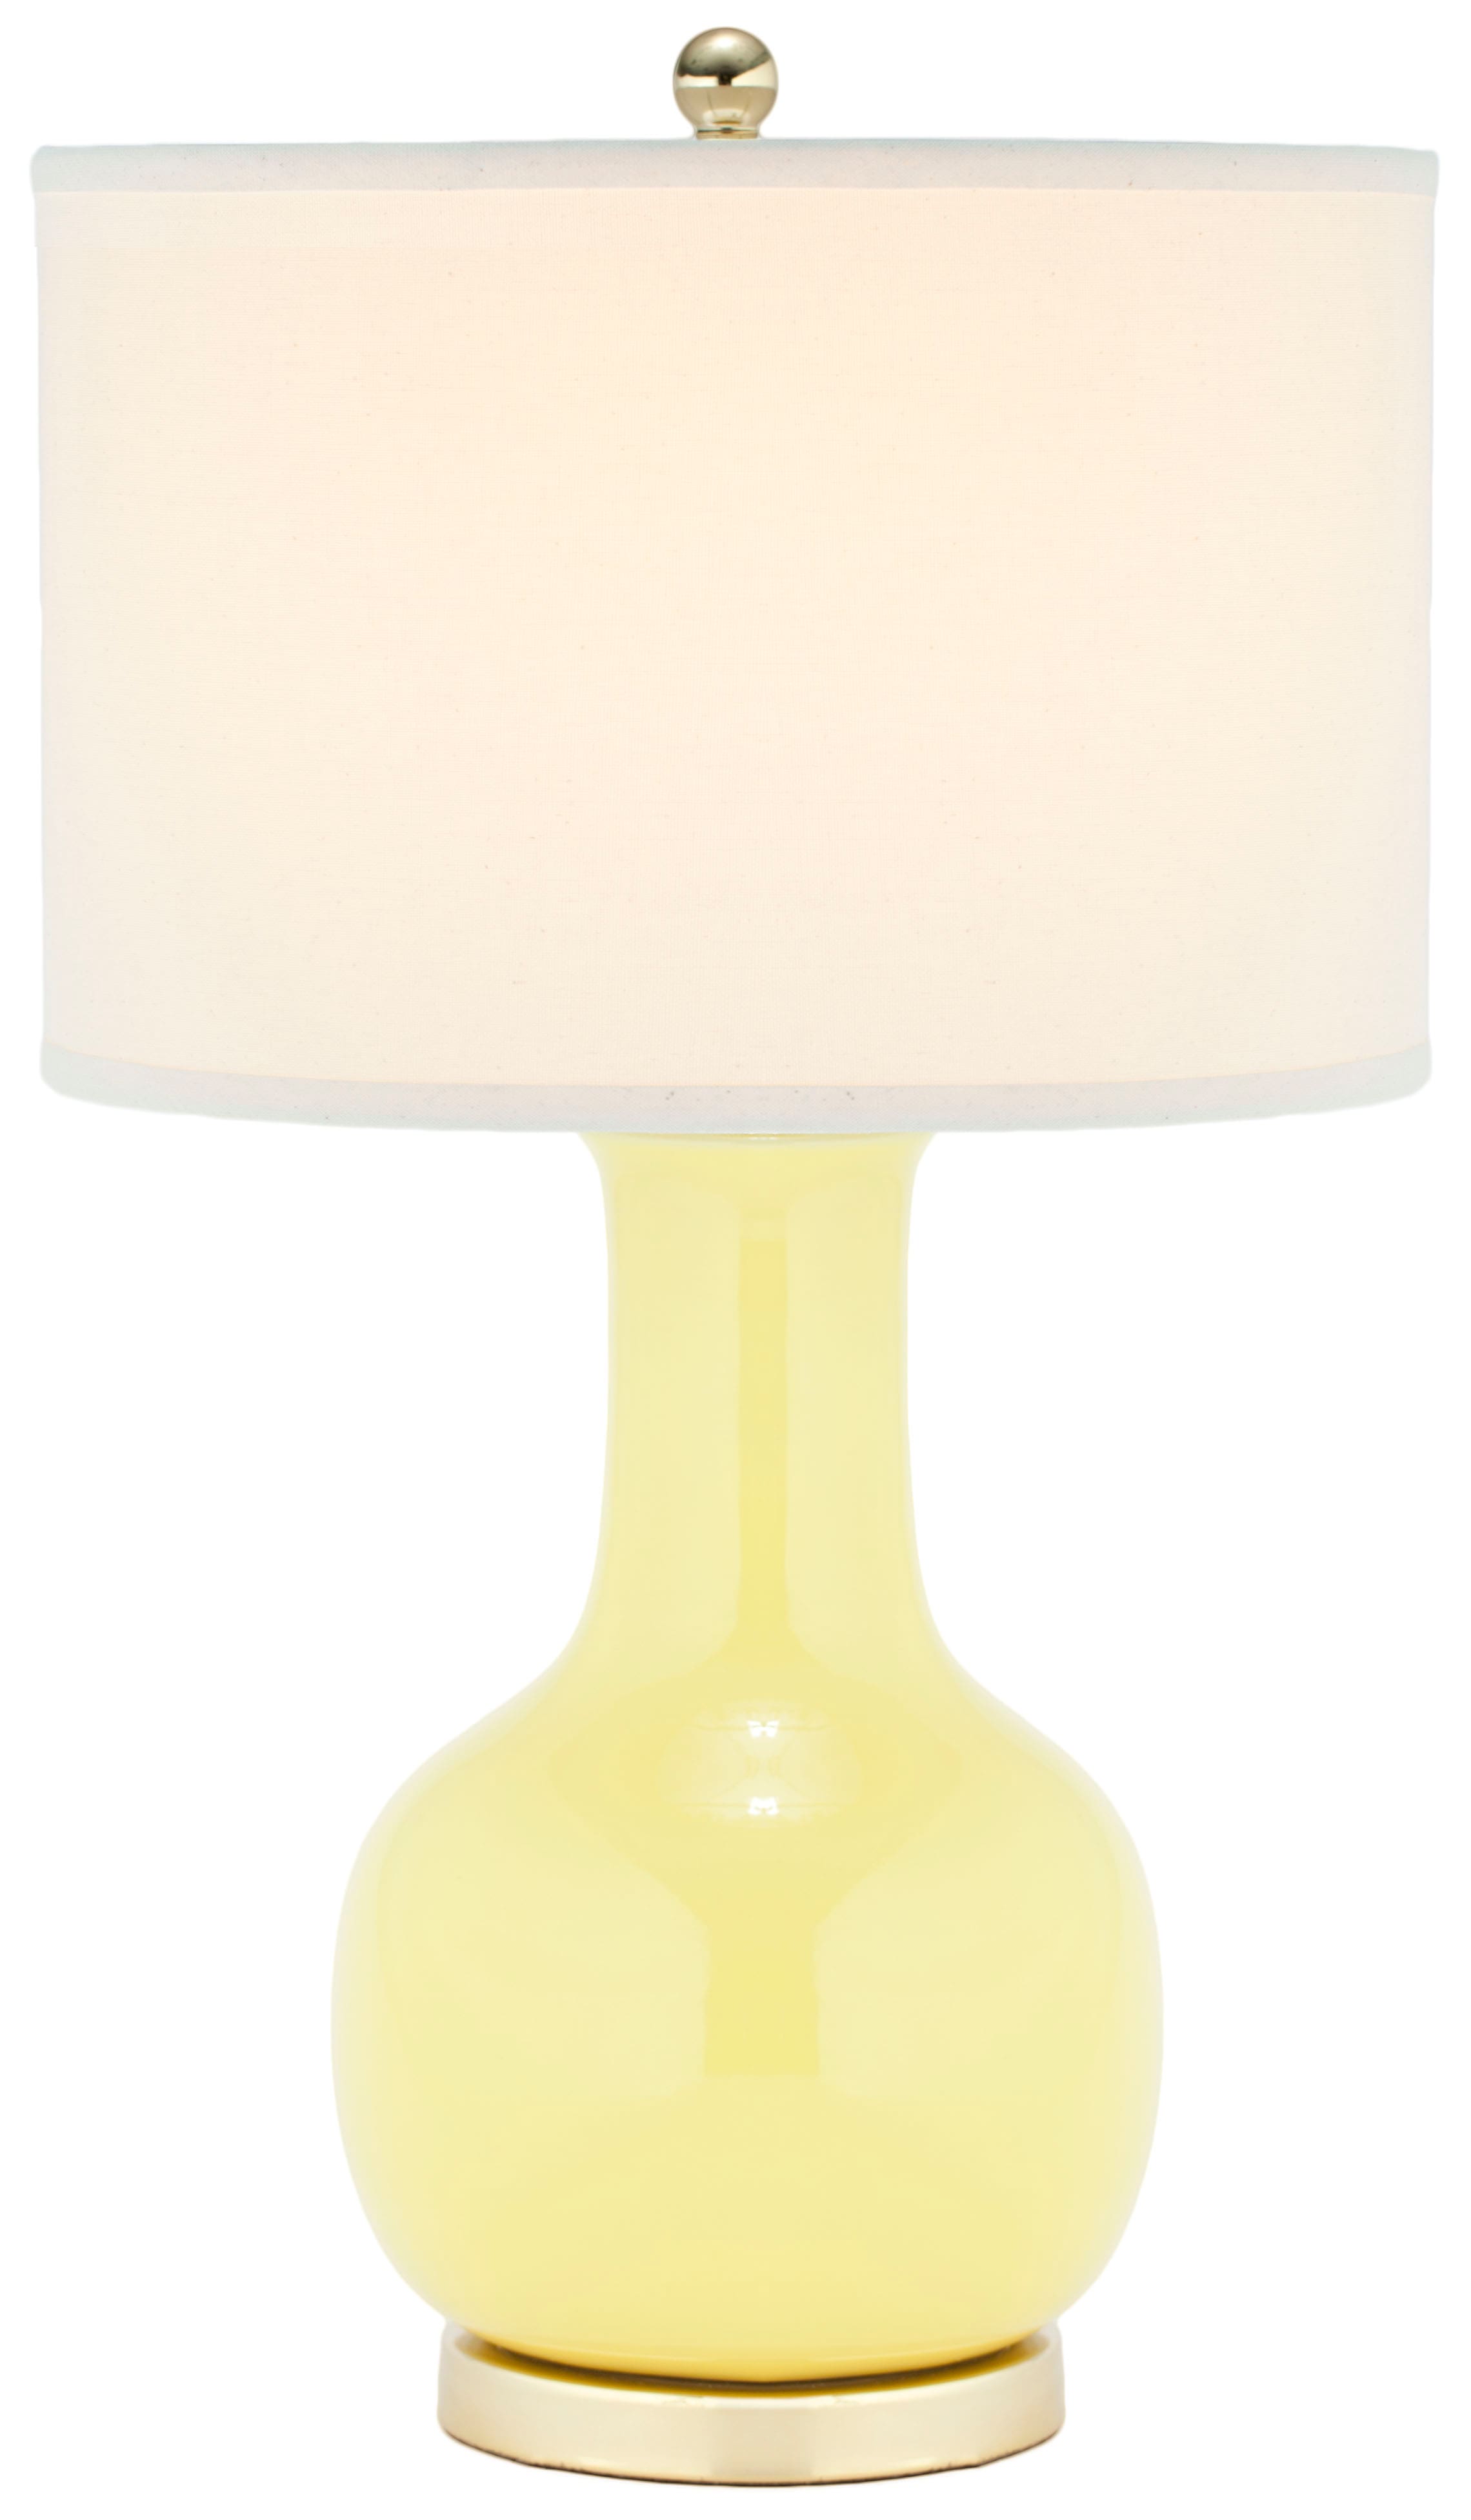 Ceramic Paris Lamp in Yellow